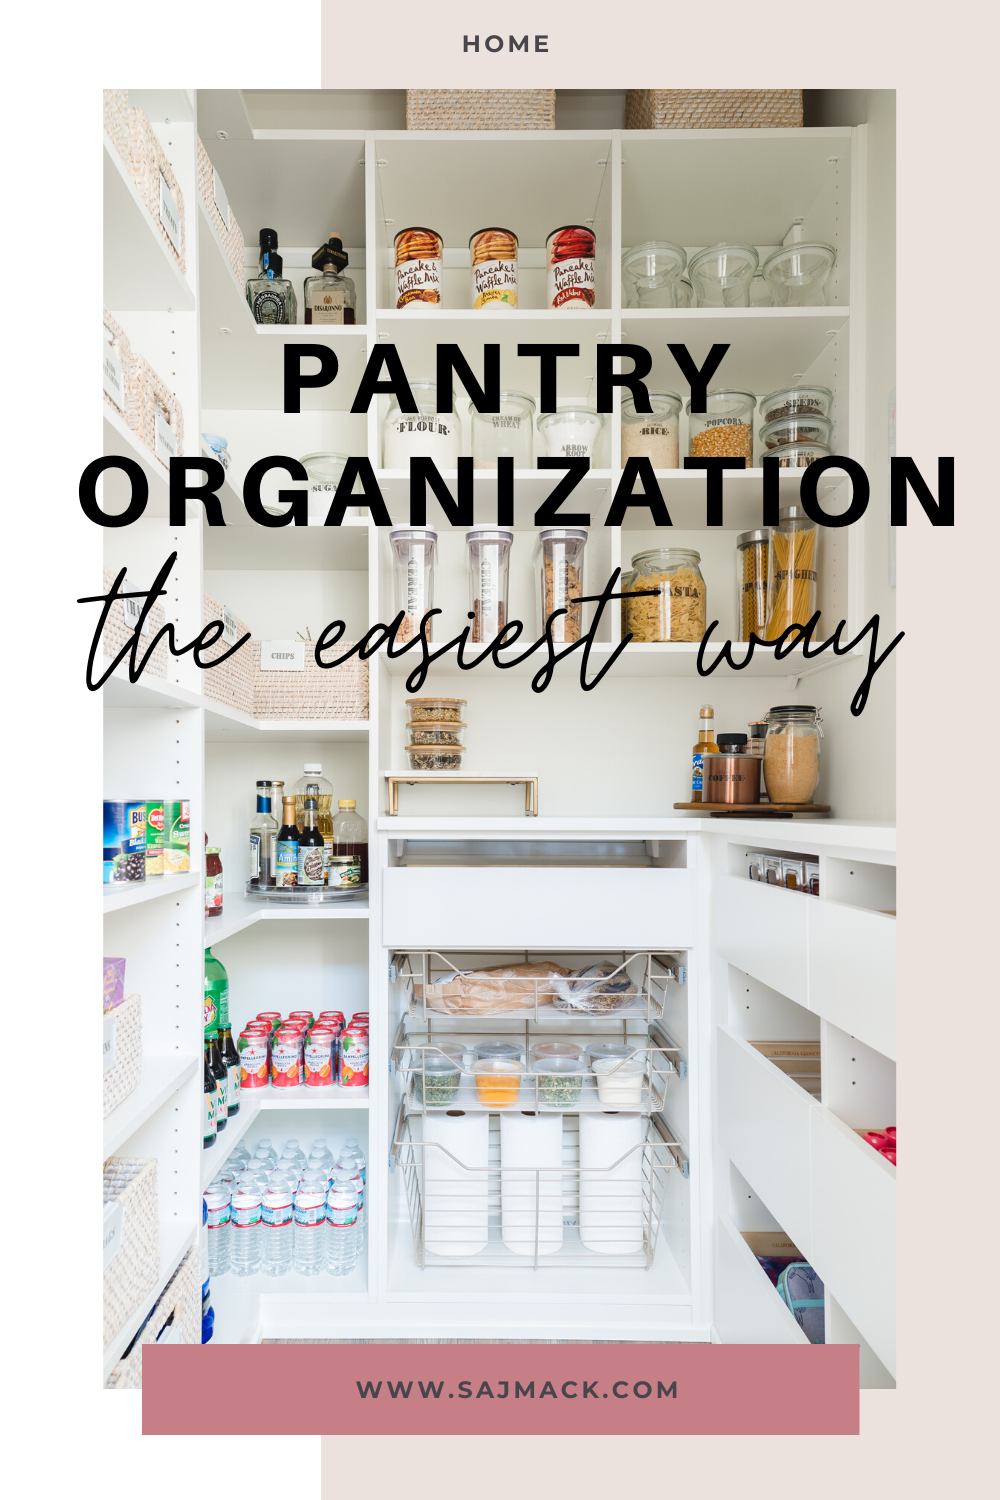 organized walk in pantry